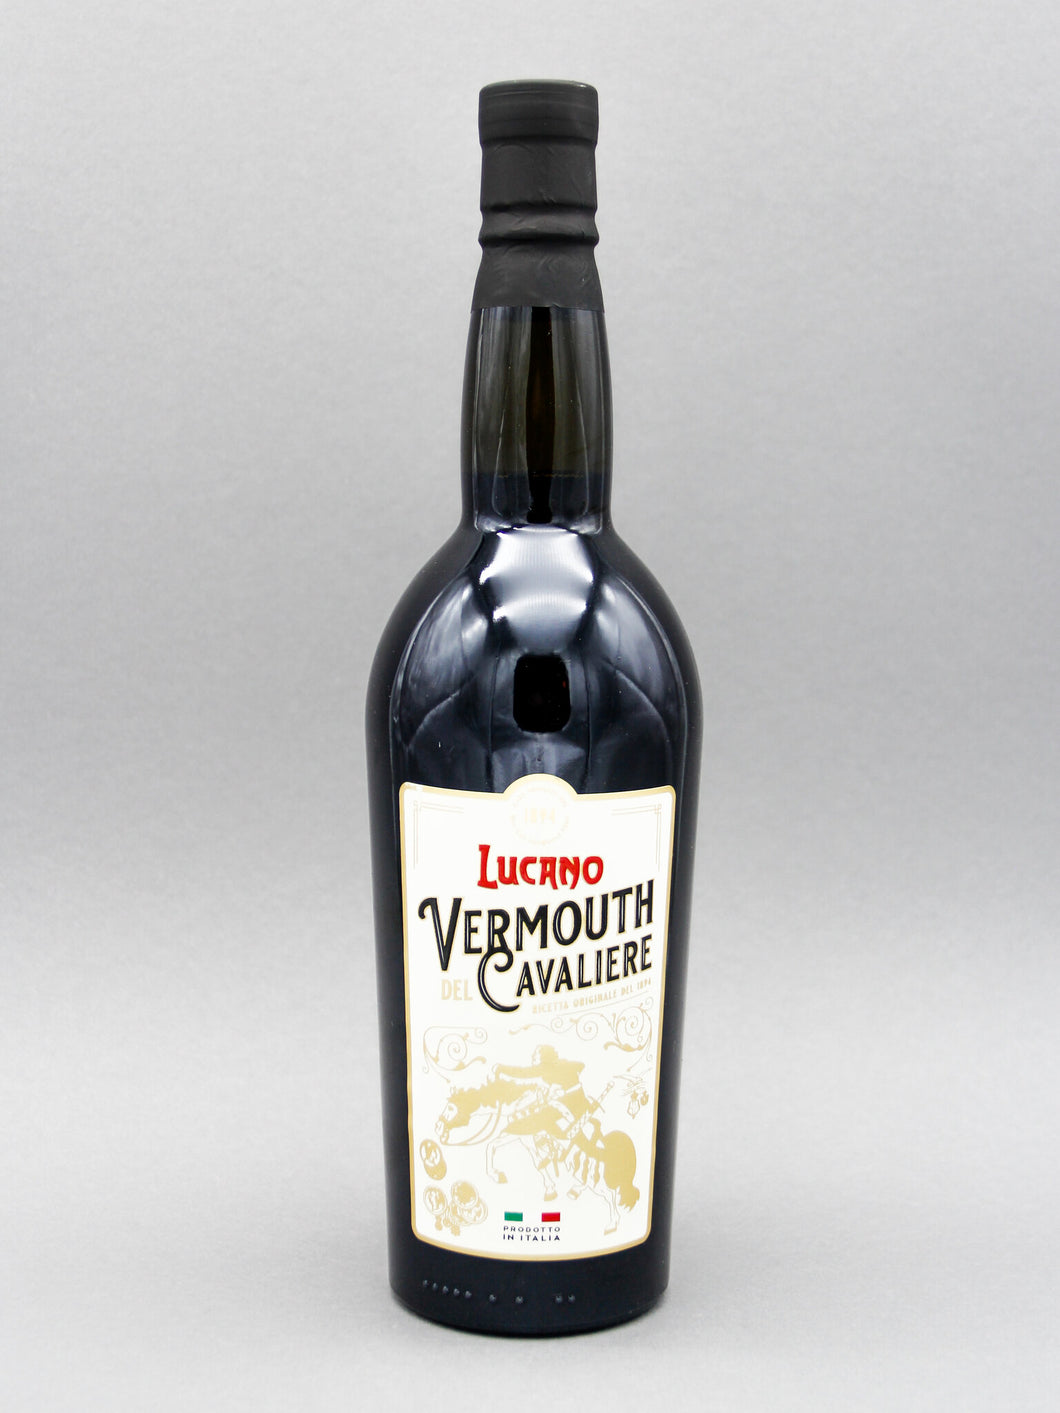 Lucano, Vermouth del Cavaliere (18%, 75cl)